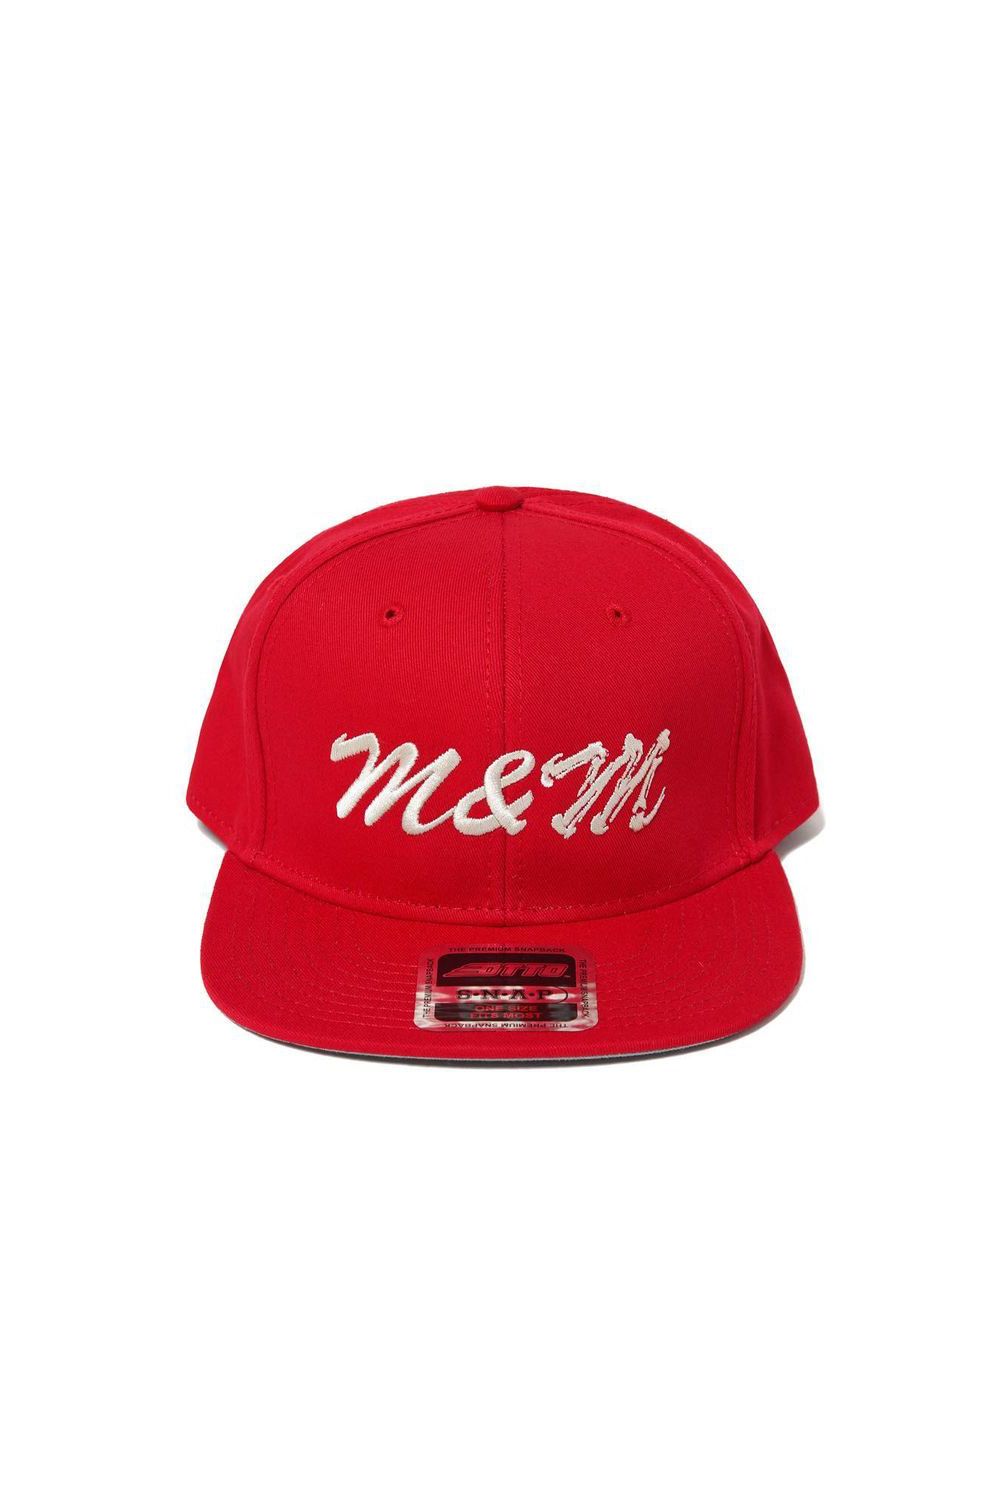 m&m エムアンドエム ×MASSES 80'S CAP マシス ベースボールキャップ 帽子 レッド